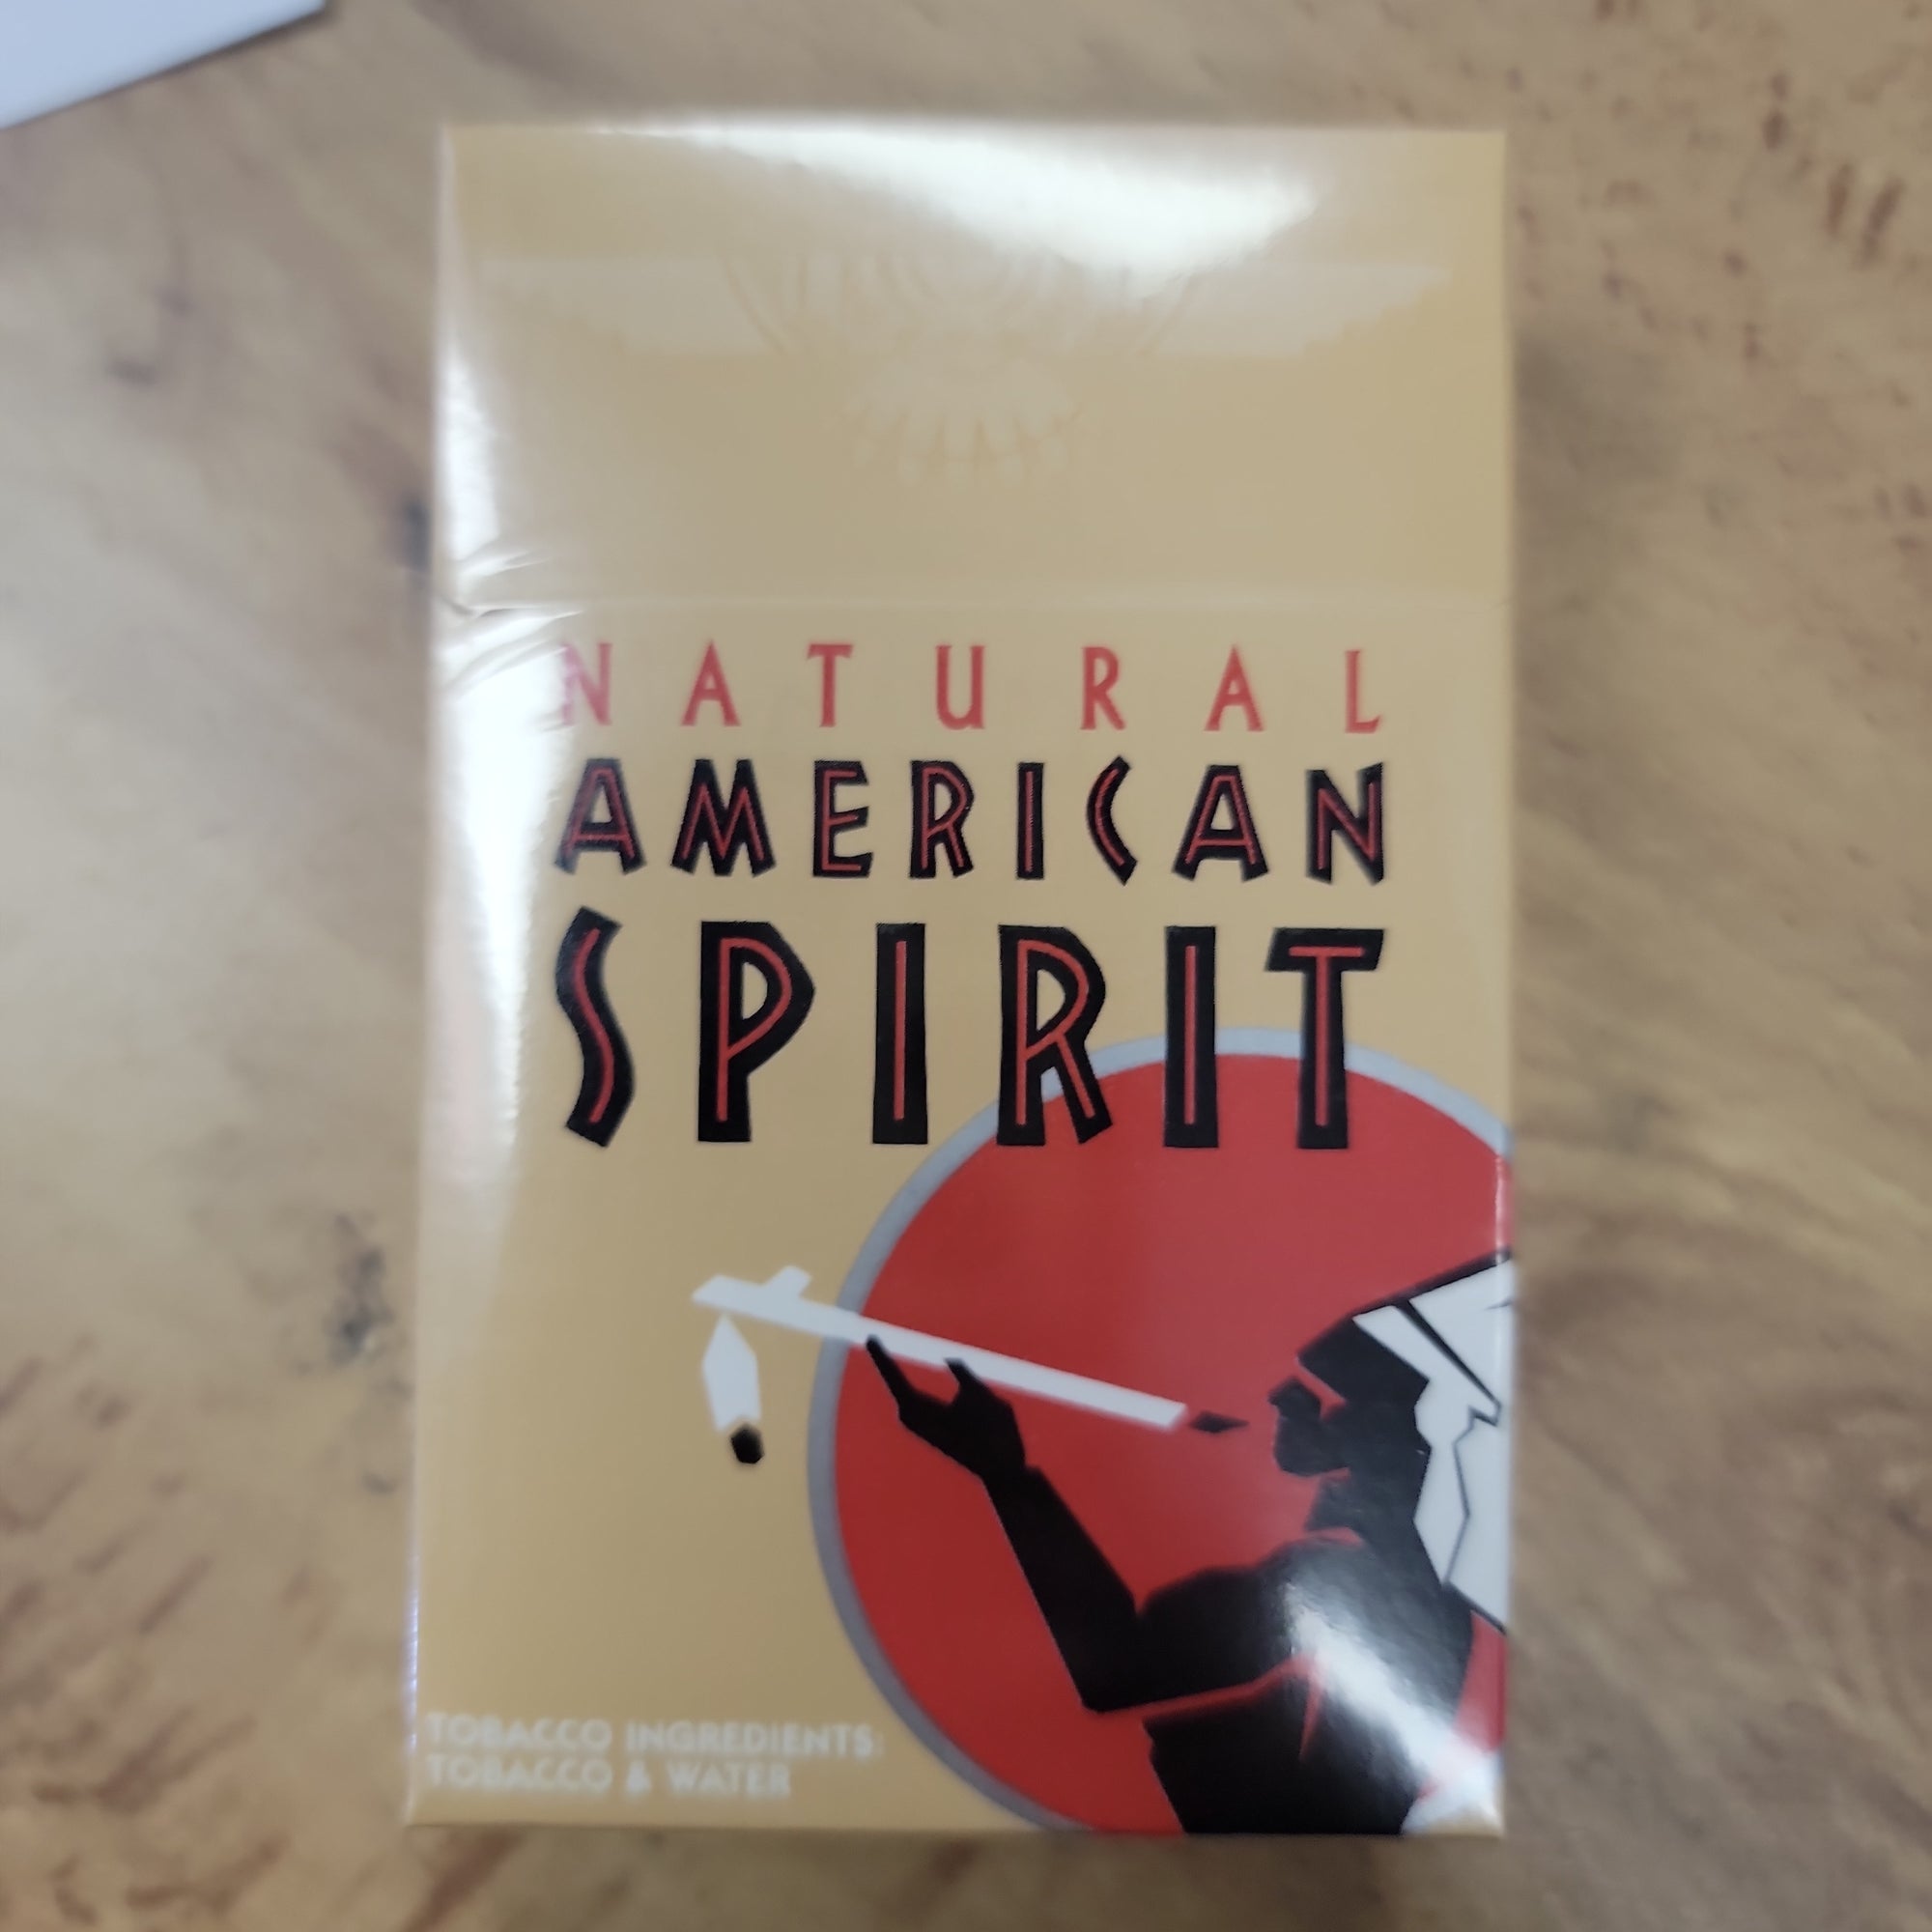 American spirit brown